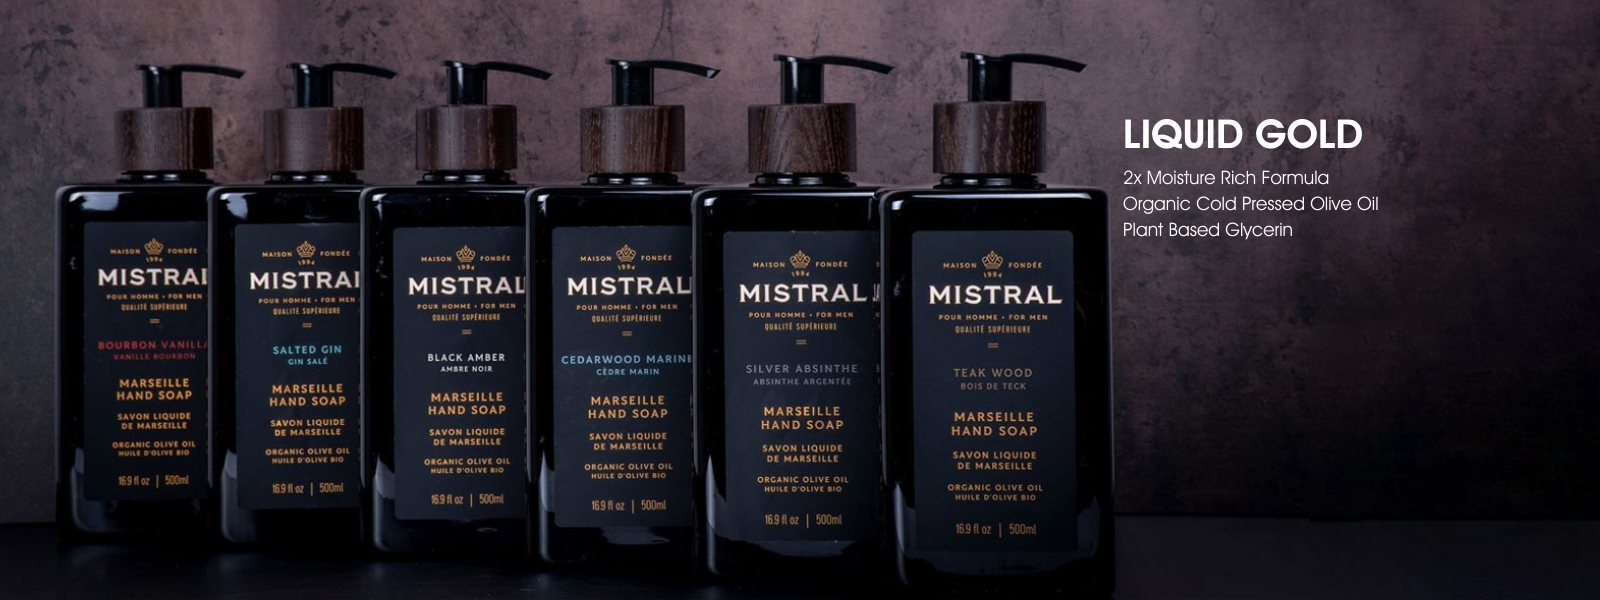 Mistral Men's Bar Soap Bourbon Vanilla